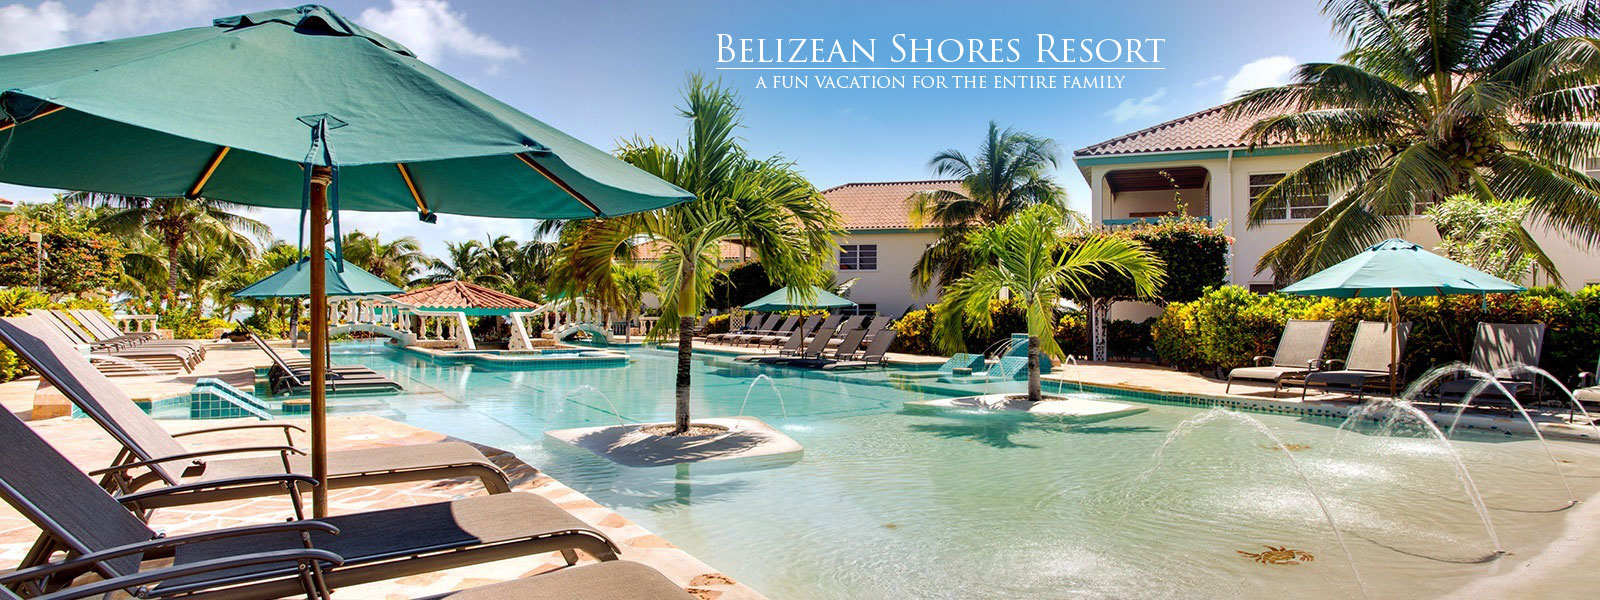 Belizean Shores Resort, Ambergris Caye, Belize